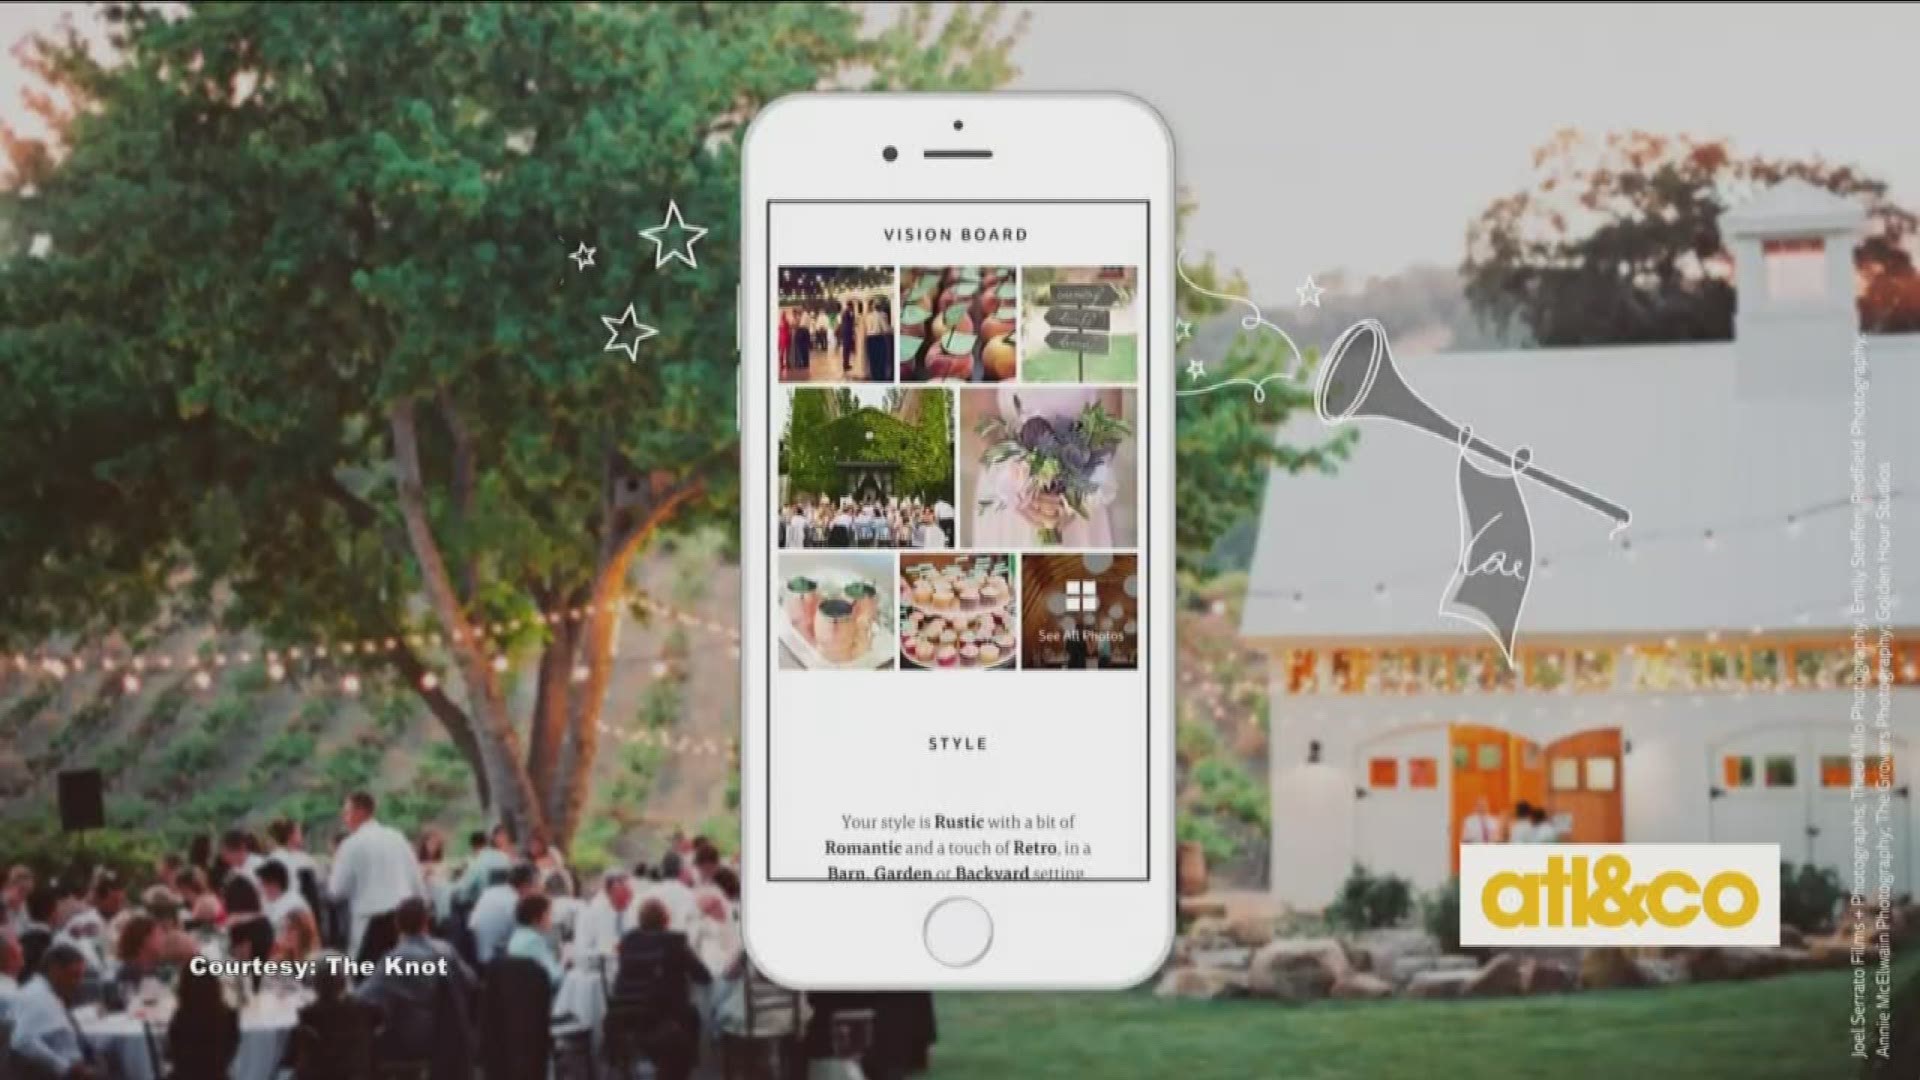 Cara Kneer shares top wedding planning apps on 'Atlanta & Company'